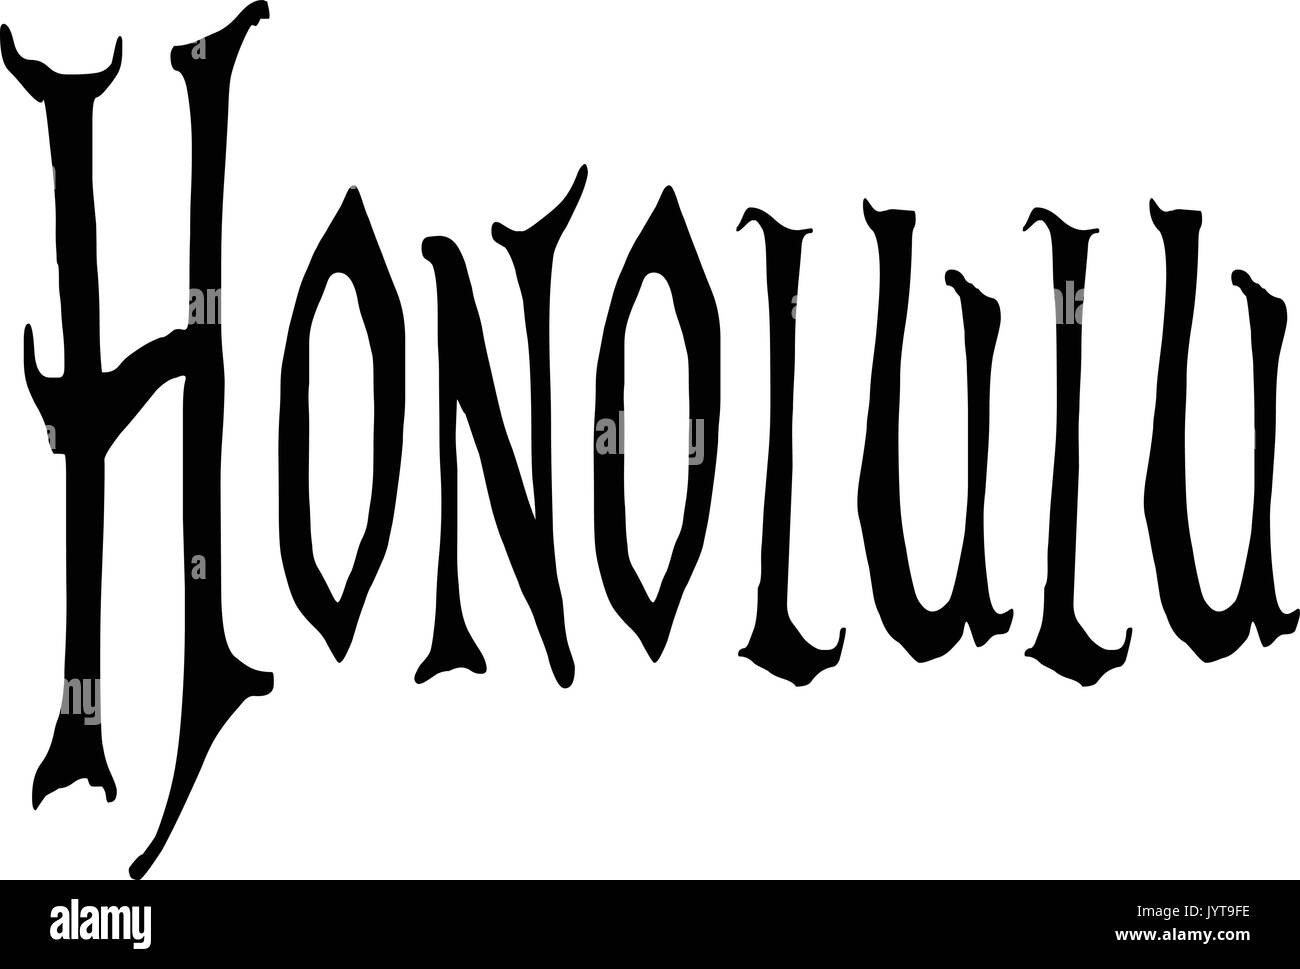 Honolulu text sign illustration on white background Stock Vector